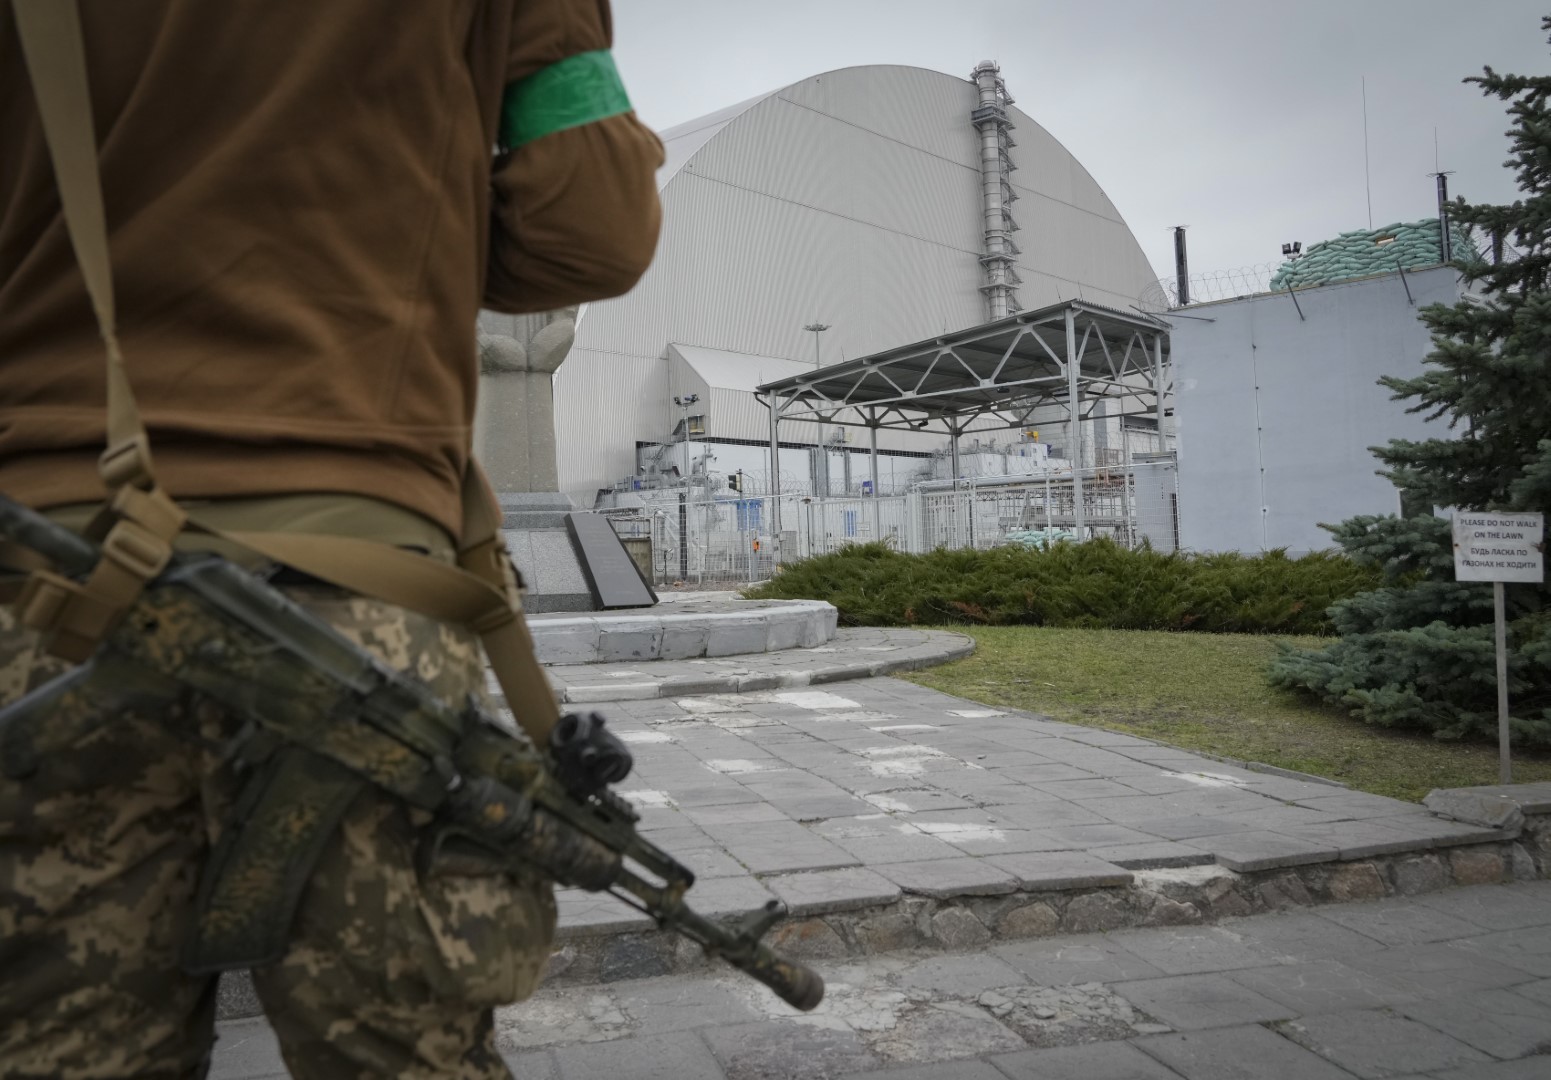 Ukrainians defy deadline to surrender in Mariupol or die | The Times of ...